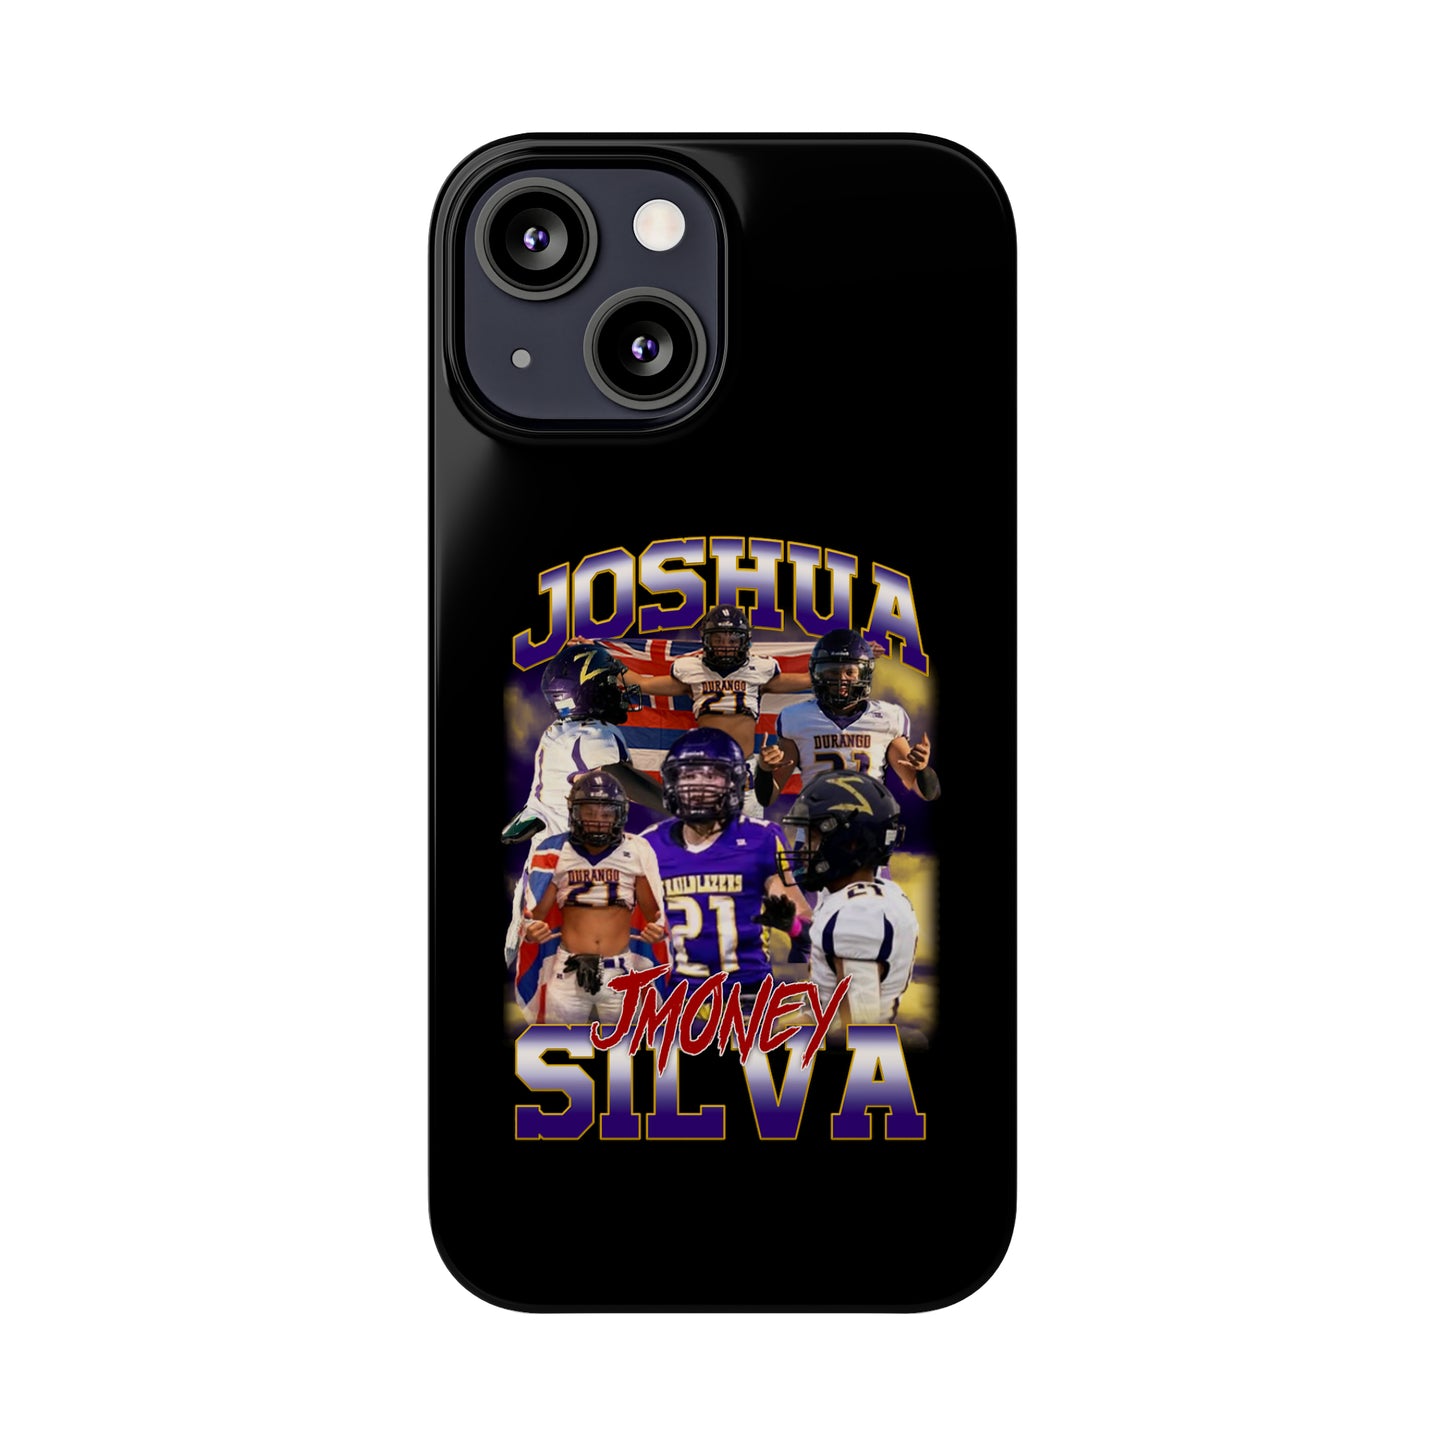 Joshua Silva Phone Case